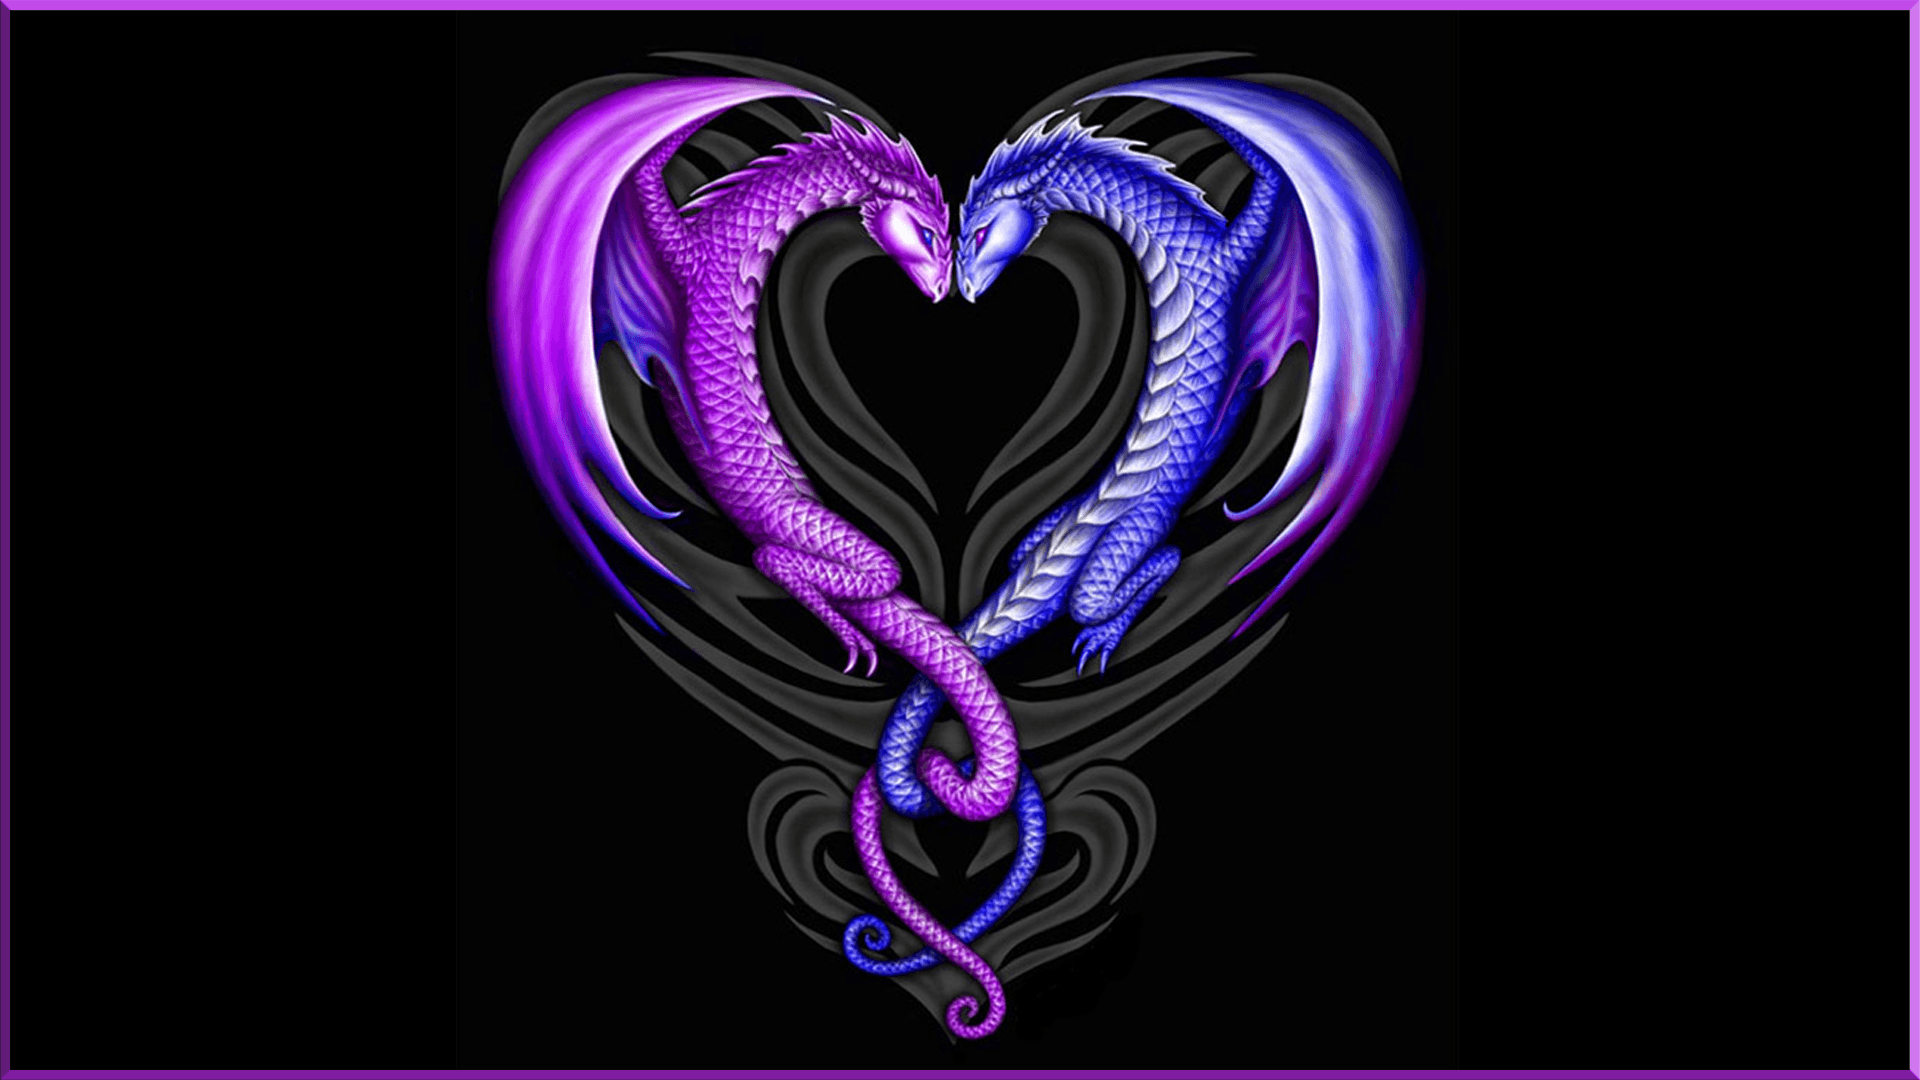 Purple Dragon Wallpaper. dragons in 2019